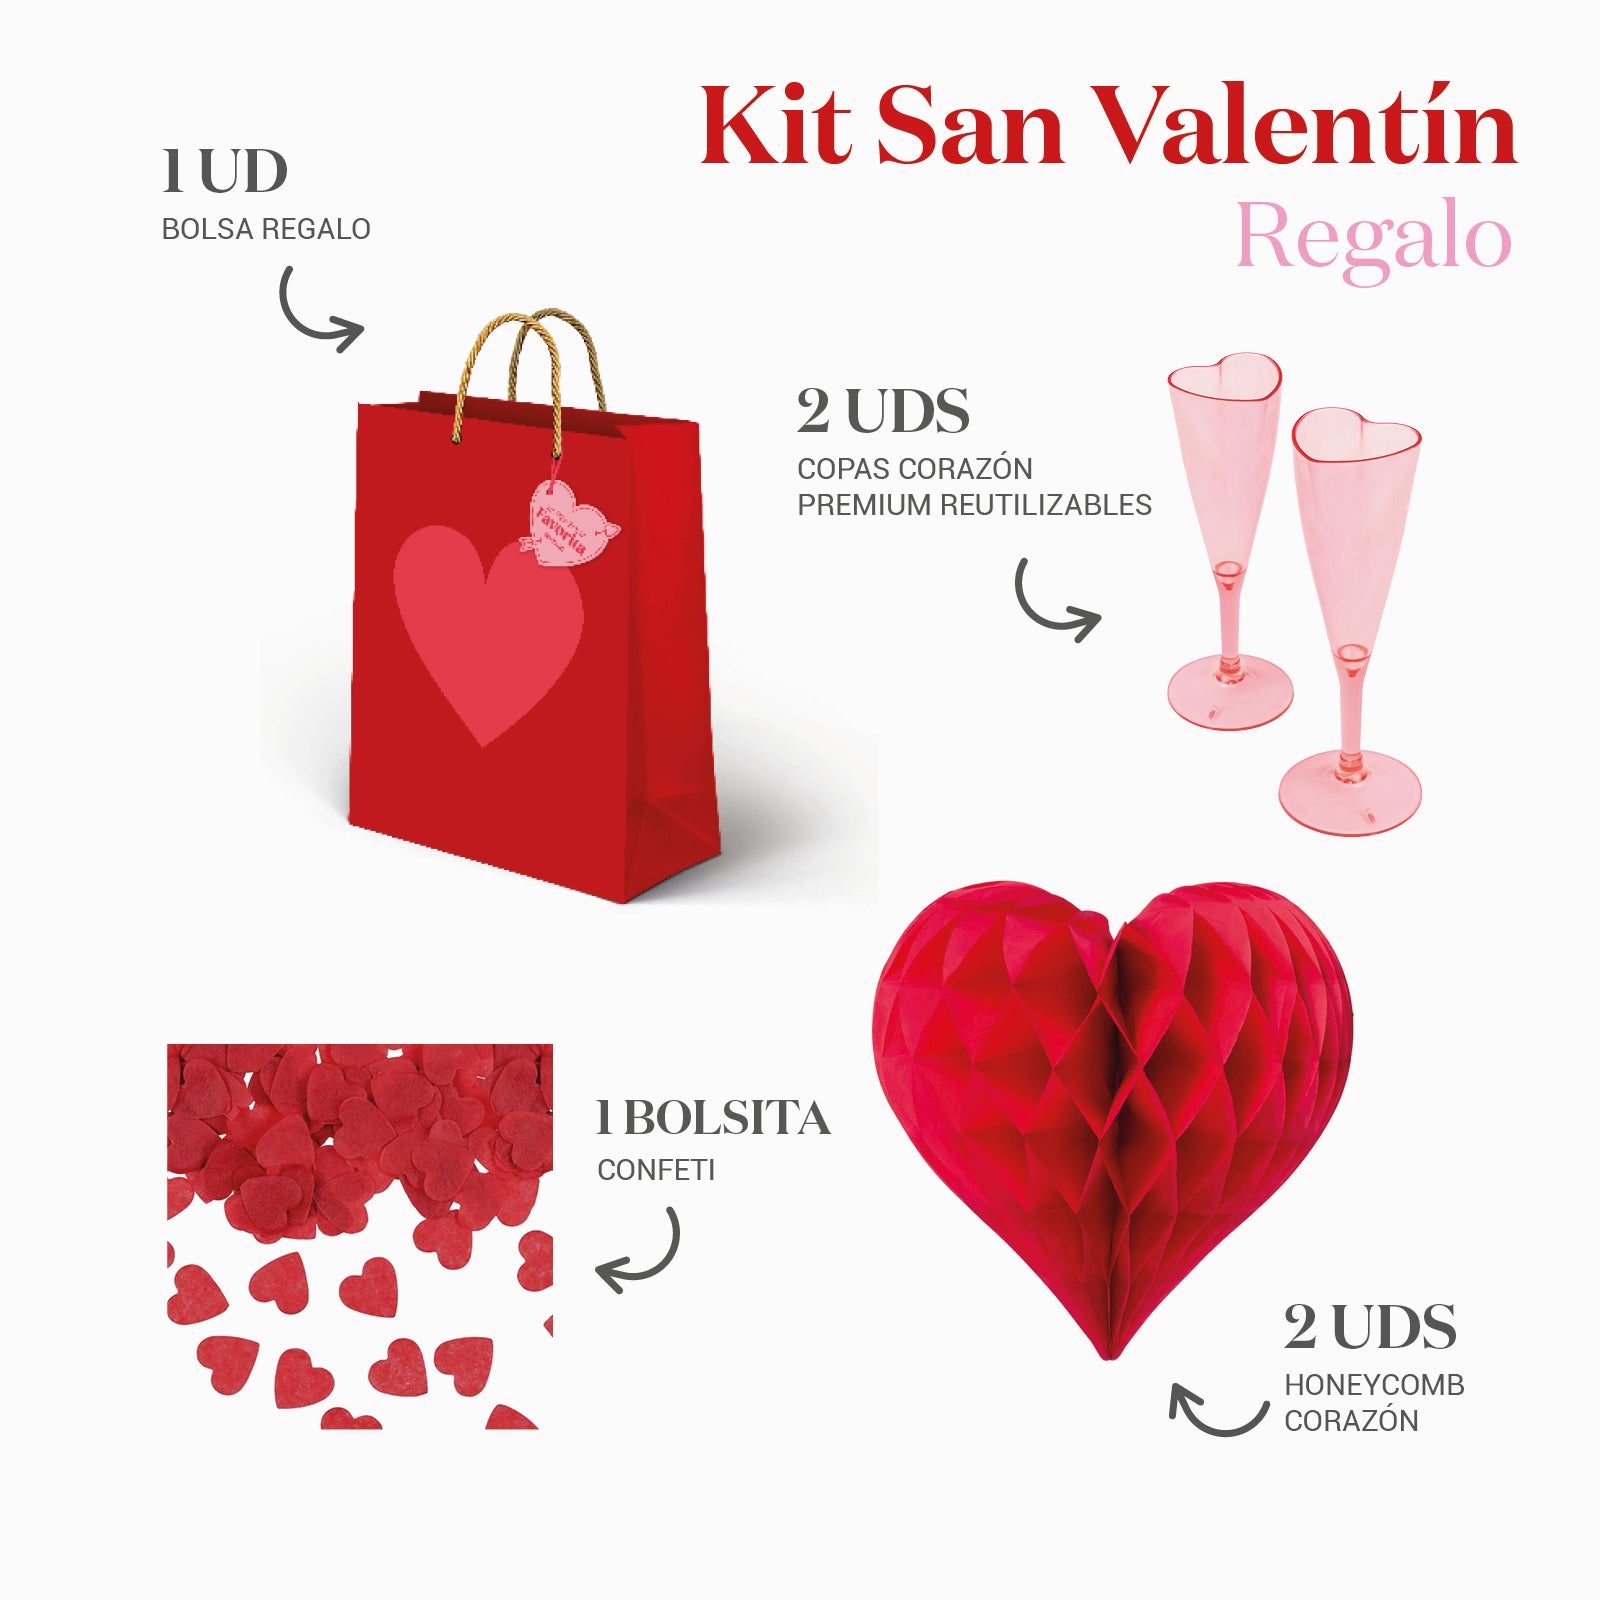 Bag do kit de presente Valentín Heart